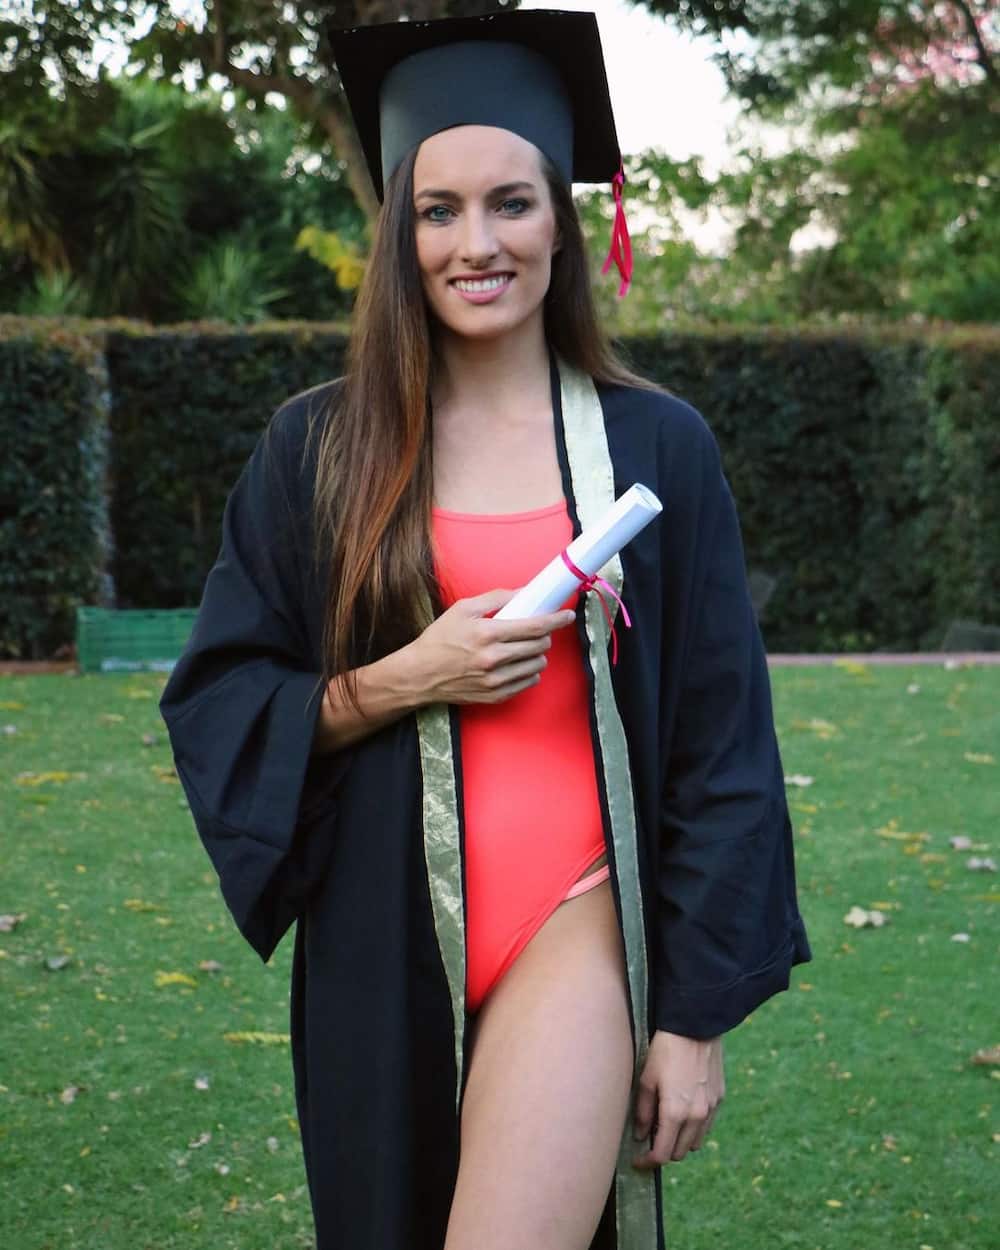 Tatjana Schoenmaker's graduation